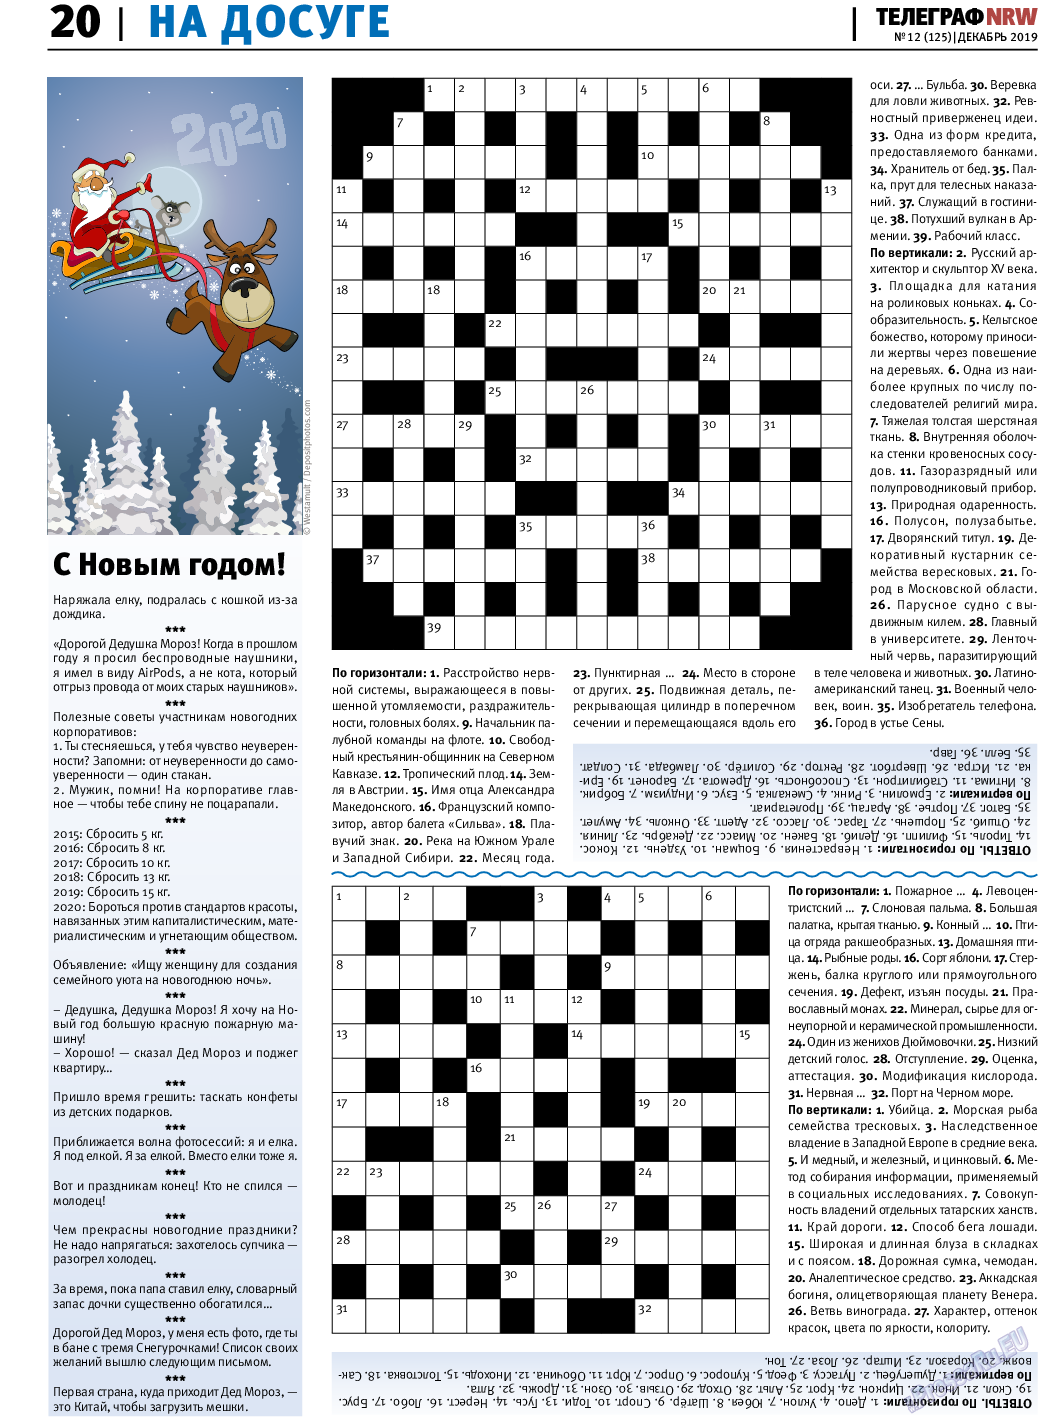 Телеграф NRW, газета. 2019 №12 стр.20